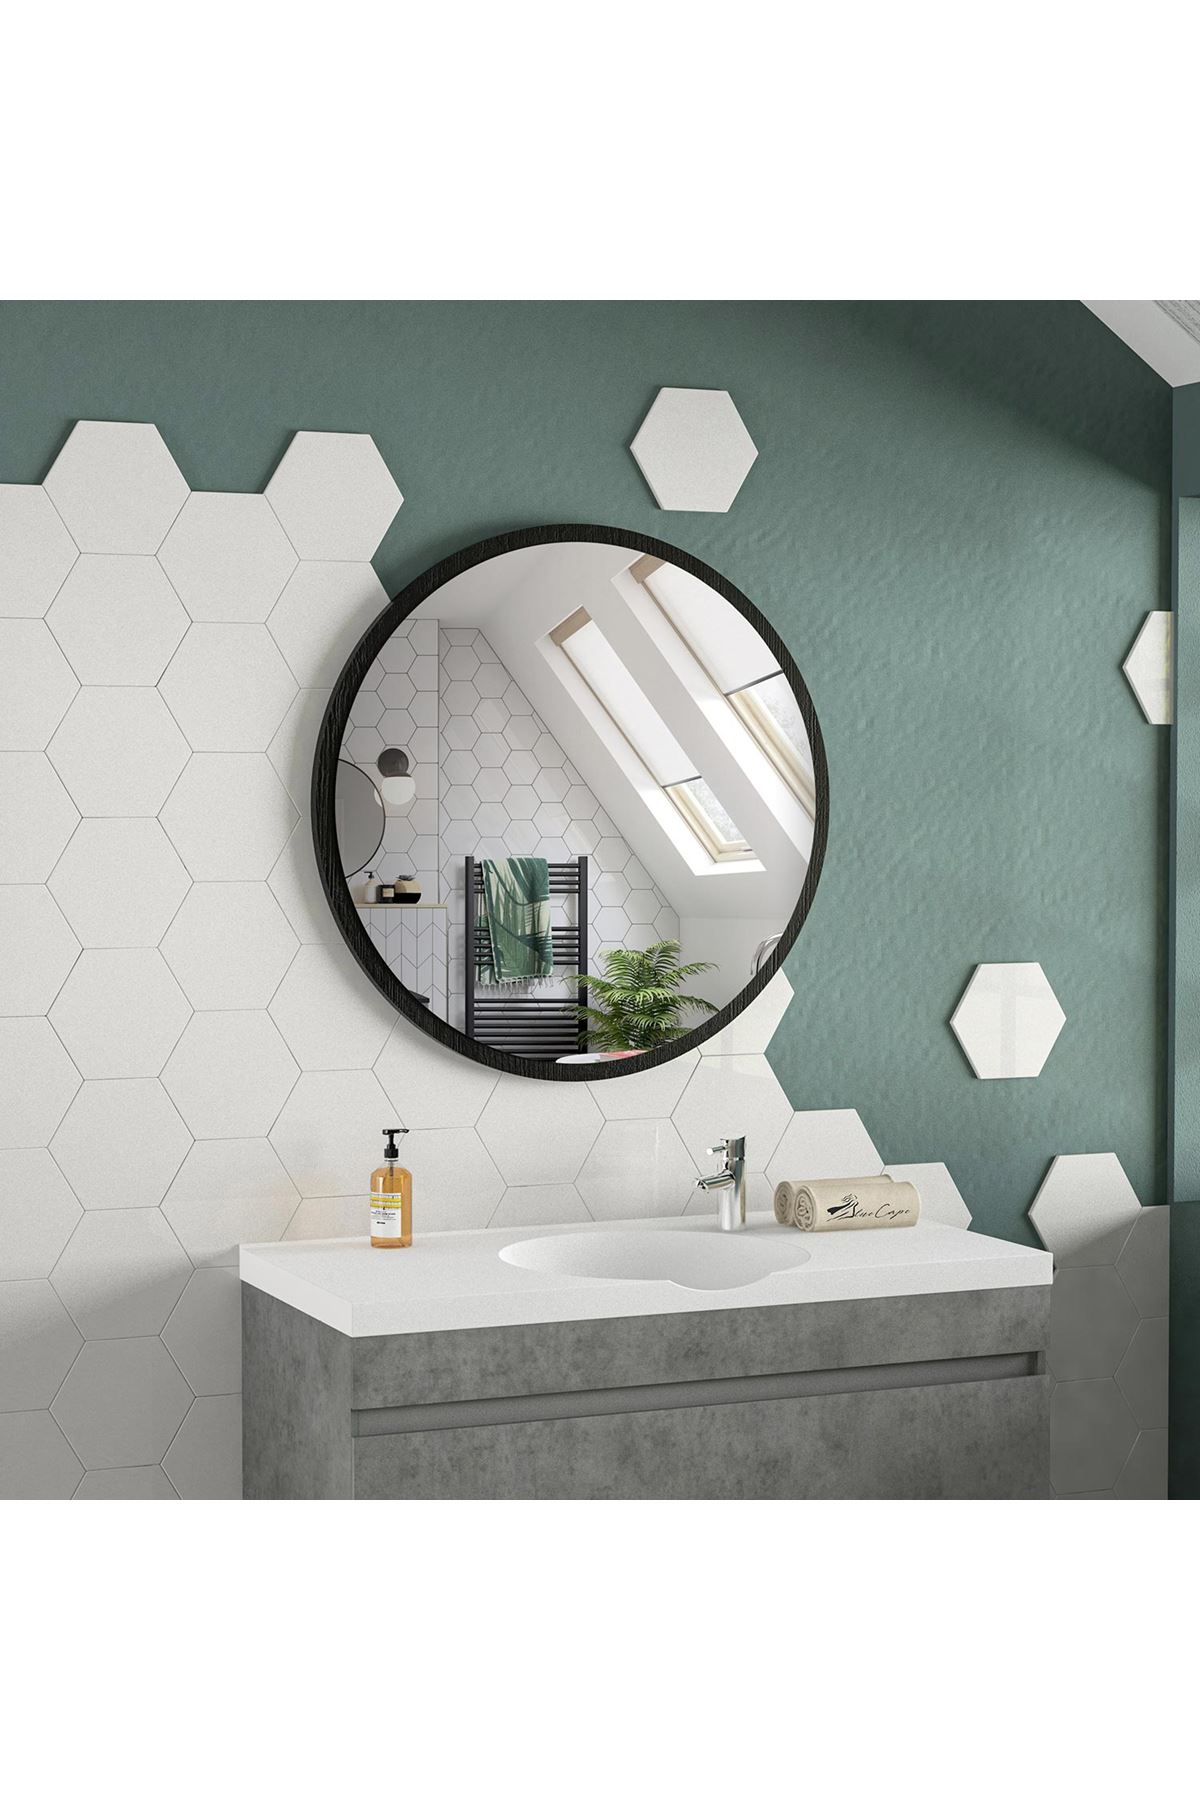 Bofigo 60 Cm Porto Banyo Aynası Dekoratif Lavabo Aynası Yuvarlak Ayna Siyah